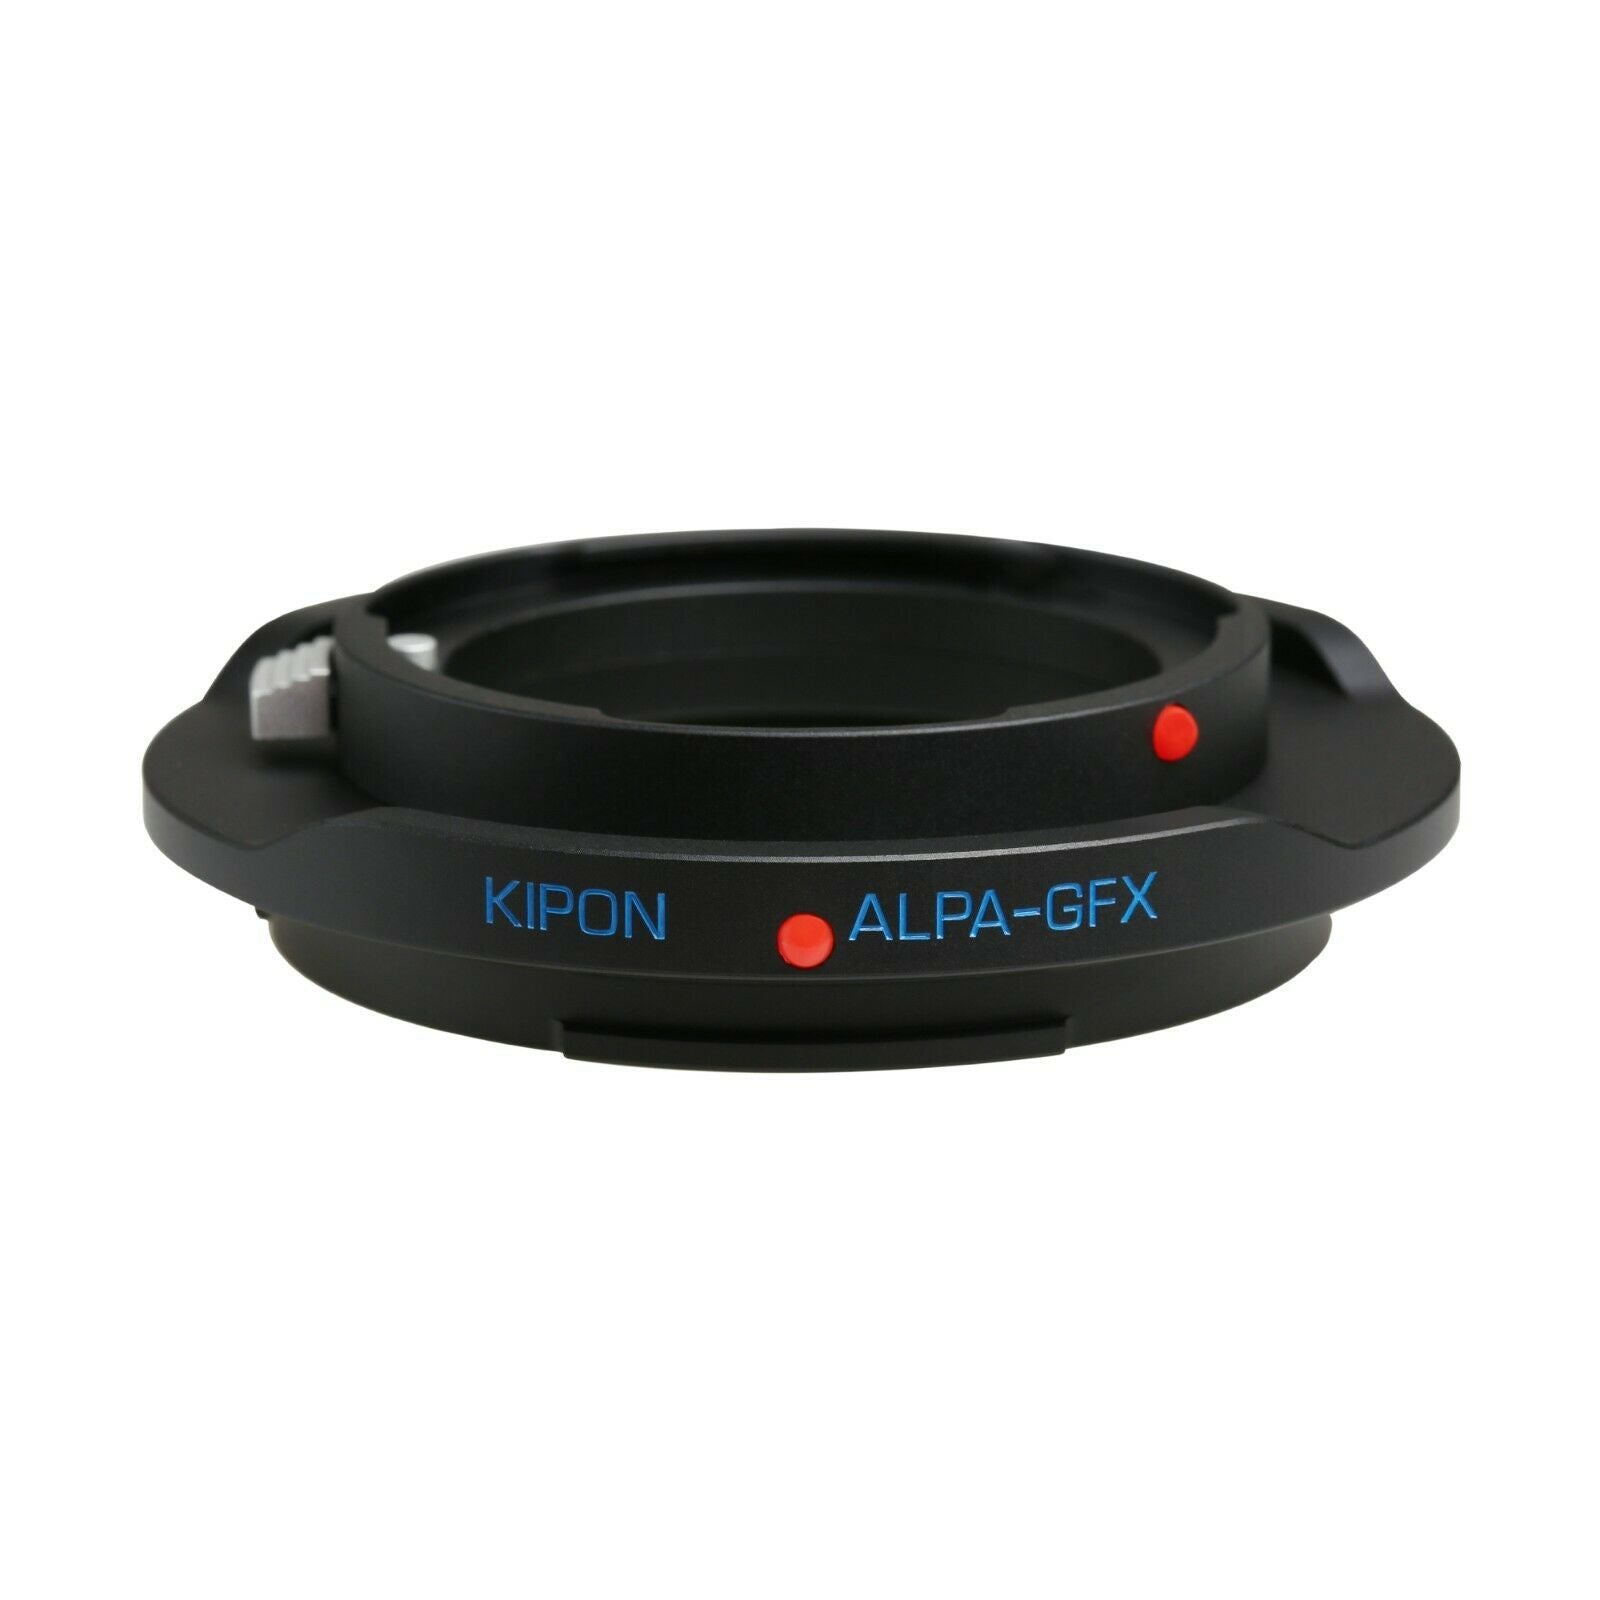 Kipon ALPA-GFX lens adapter for Alpa mount lens to Fujifilm G-Mount Fuji GFX medium format mirrorless camera Pro Adapter - GFX 50S 100S